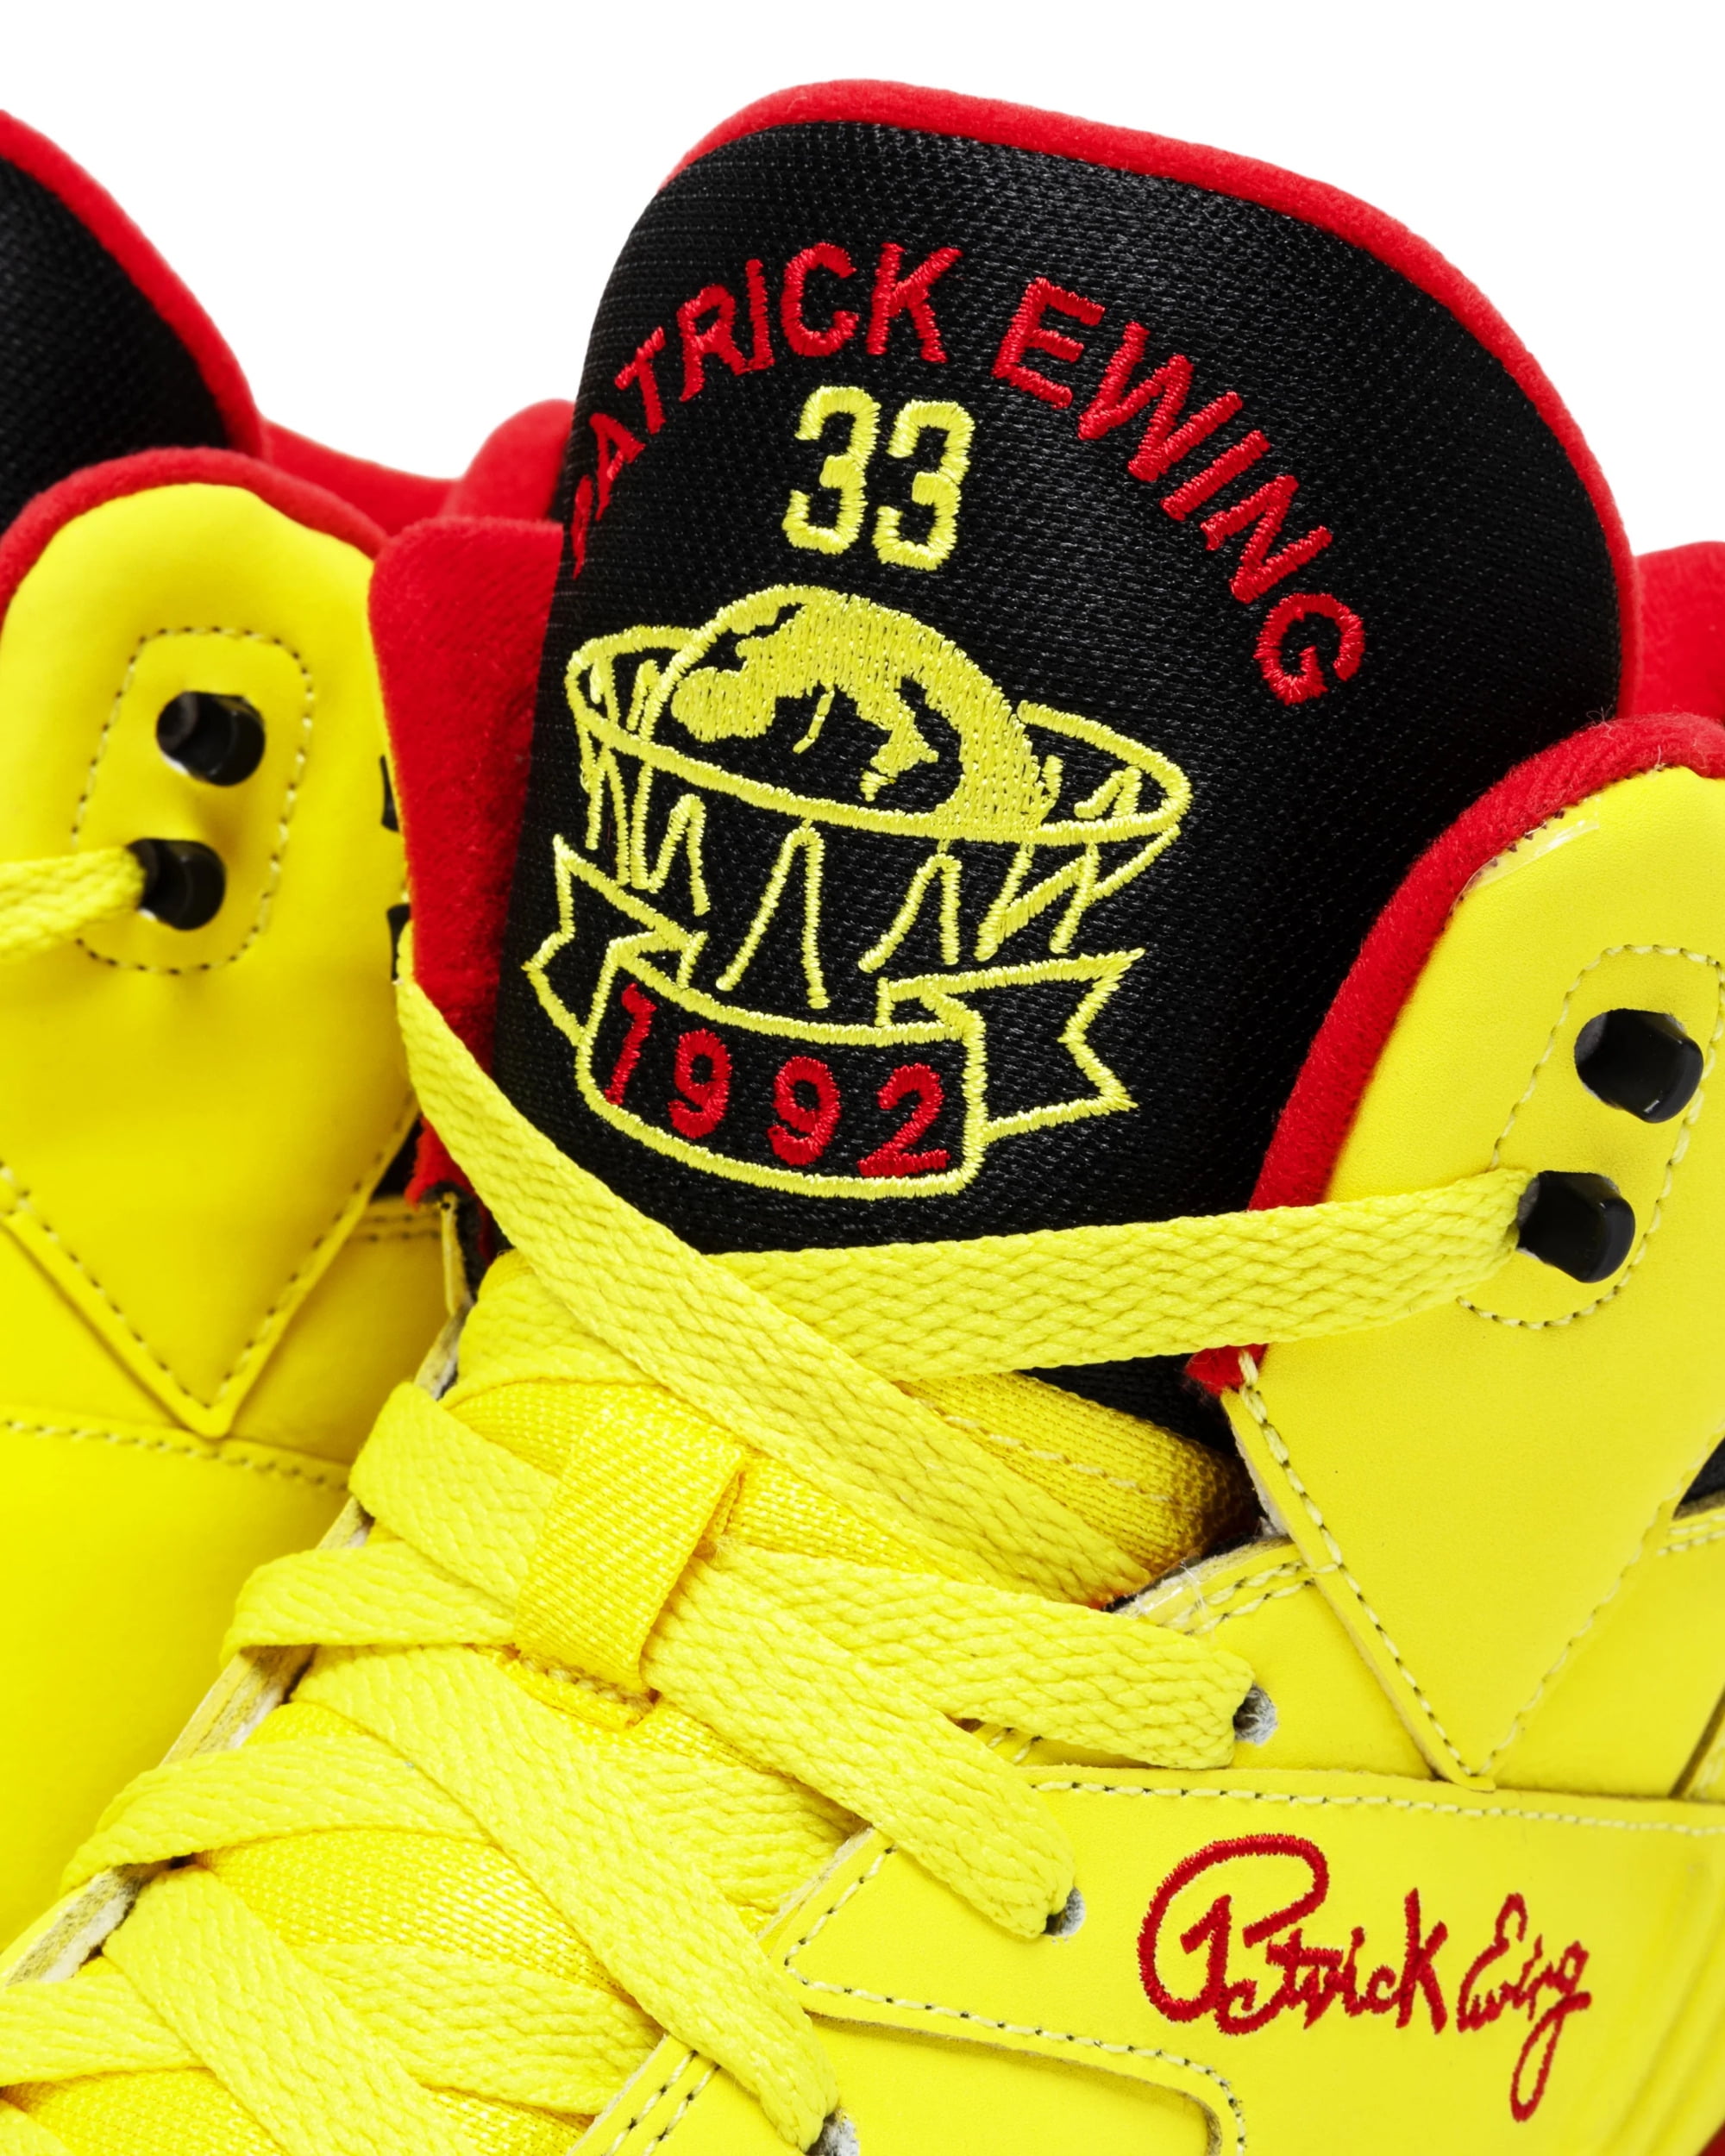 Ewing Athletics - GPF Footwear LLC Ewing Athletics Ewing Eclipse USA  White Men's Basketball Shoes 1EW90152-125